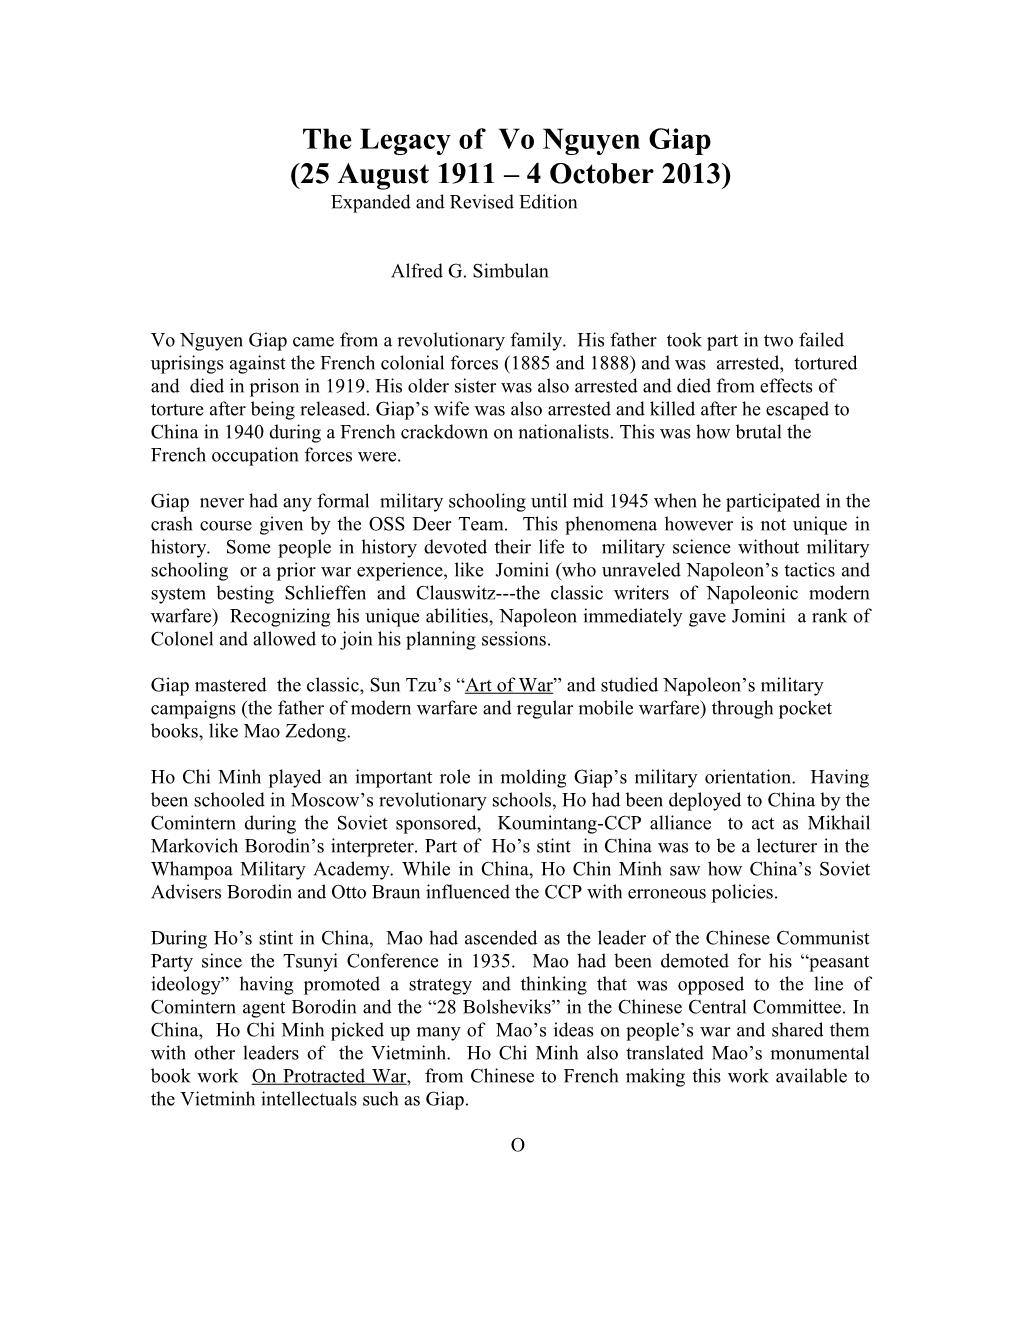 In Memory of Vo Nguyen Giap (25 August 1911 4 October 2013)